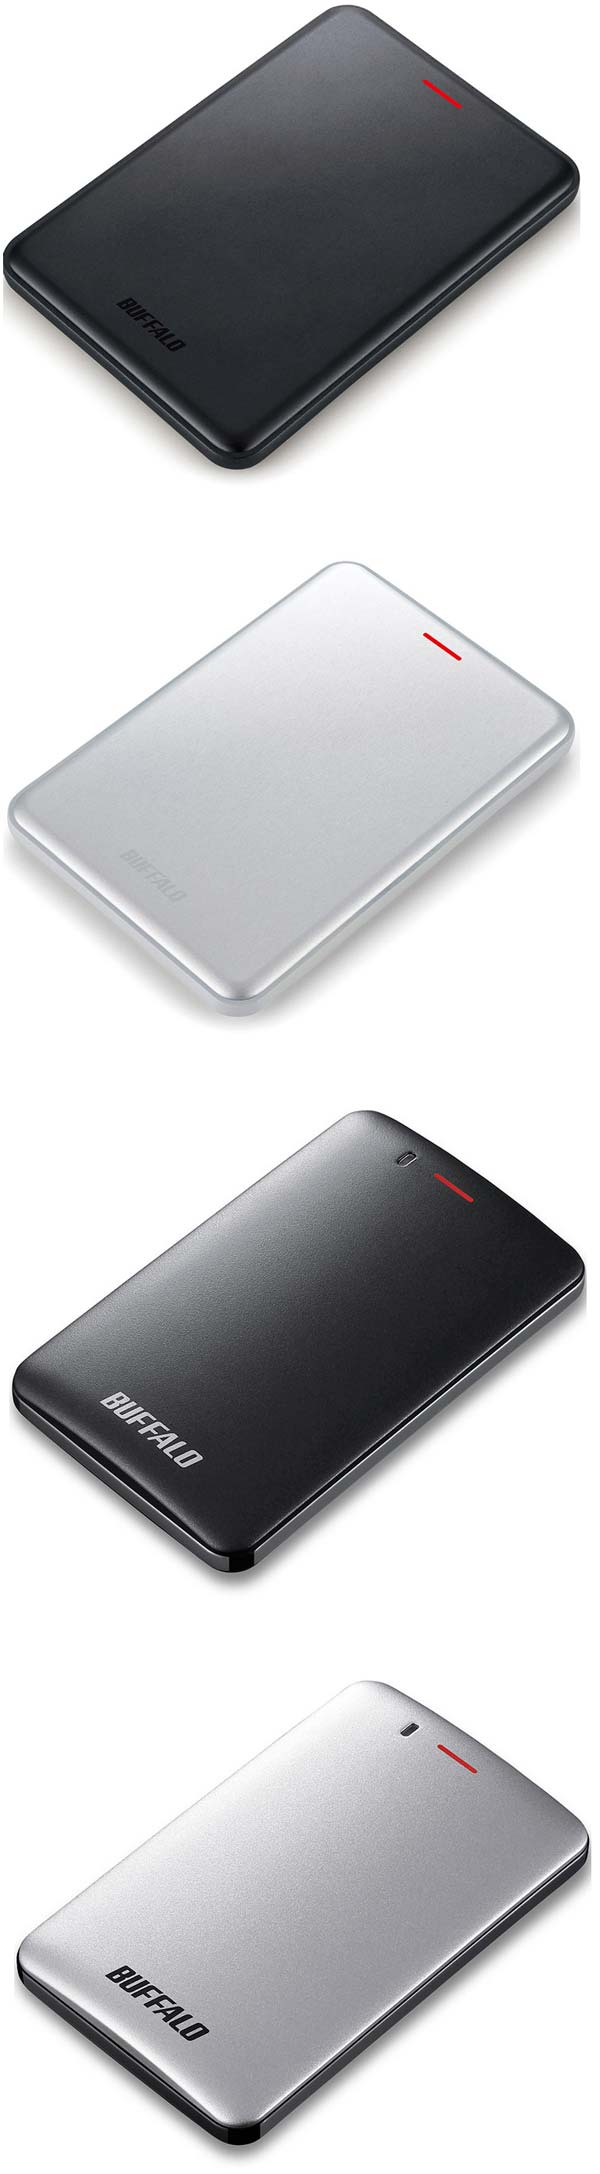 Накопители Buffalo MiniStation SSD (SSD-PMU3) и MiniStation SSD Velocity (SSD-PUSU3)